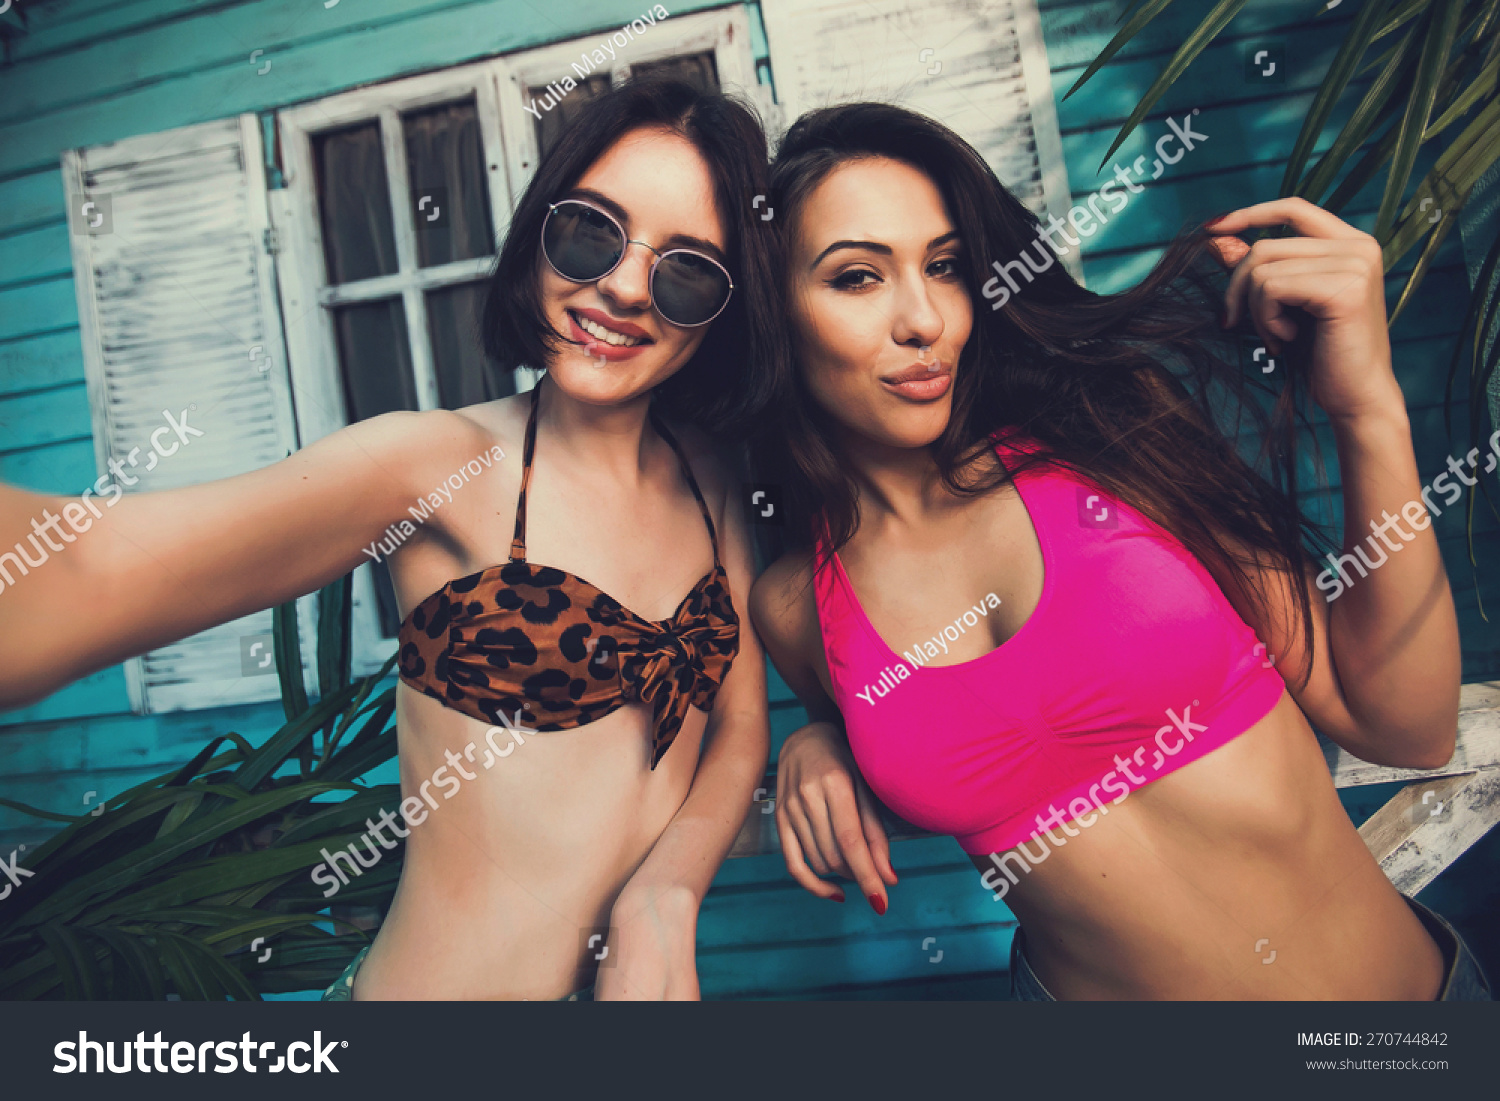 hottest adult women selfie